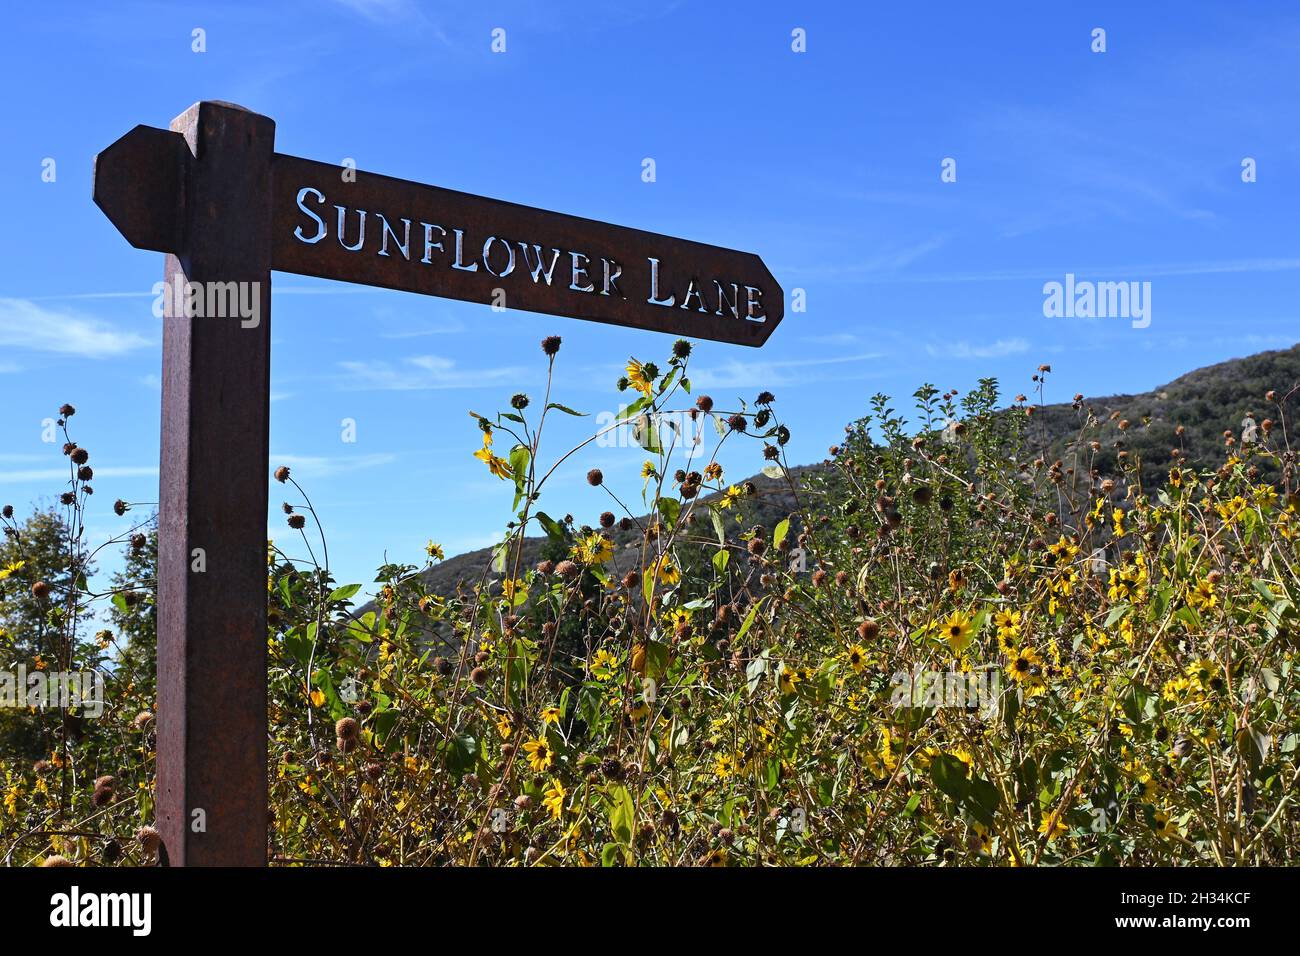 OAK GLEN, CALIFORNIA - 21 OCT 2021: Sunflower Lane sign in the Wildlands Conservancy Oak Glen Preserve in the foothills of the San Bernardino Mountain Stock Photo